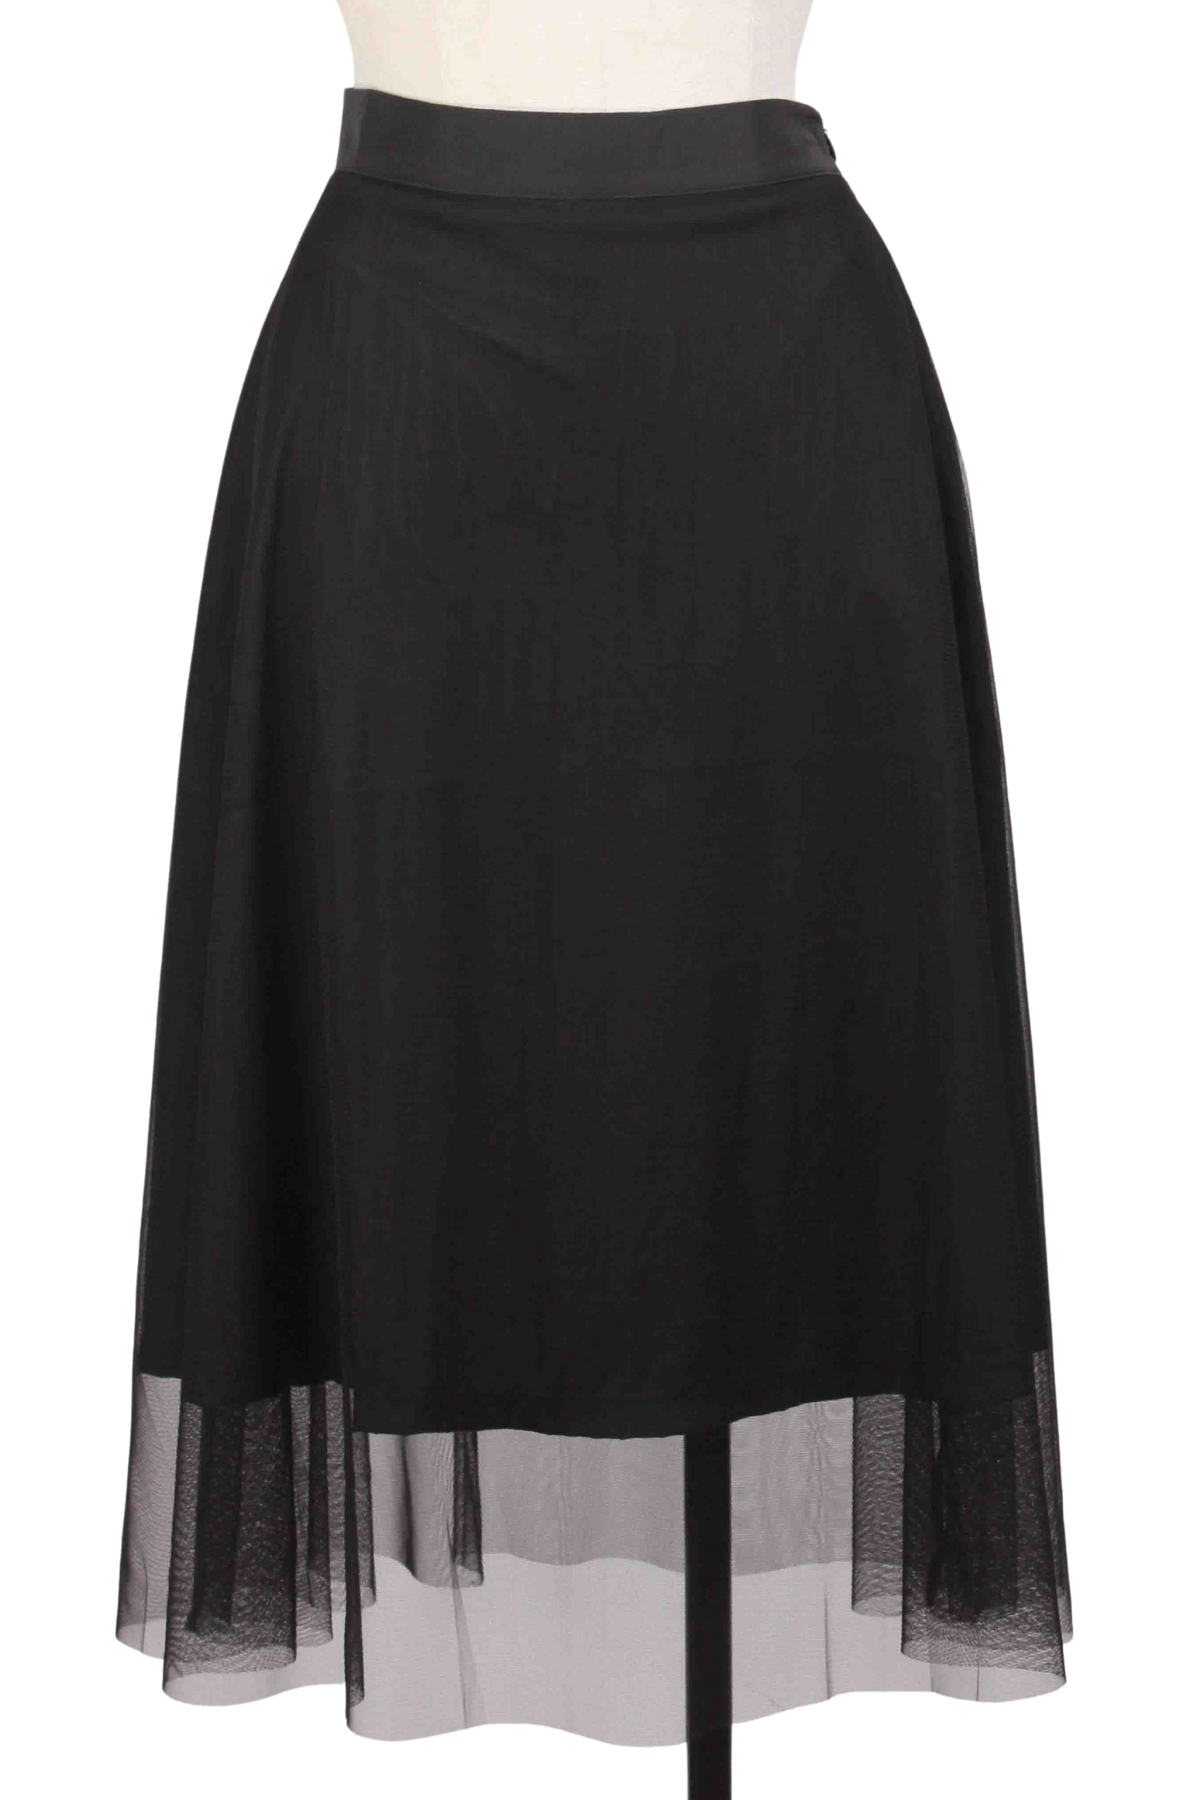 Black Mesh A Line Asia Skirt by Kozan